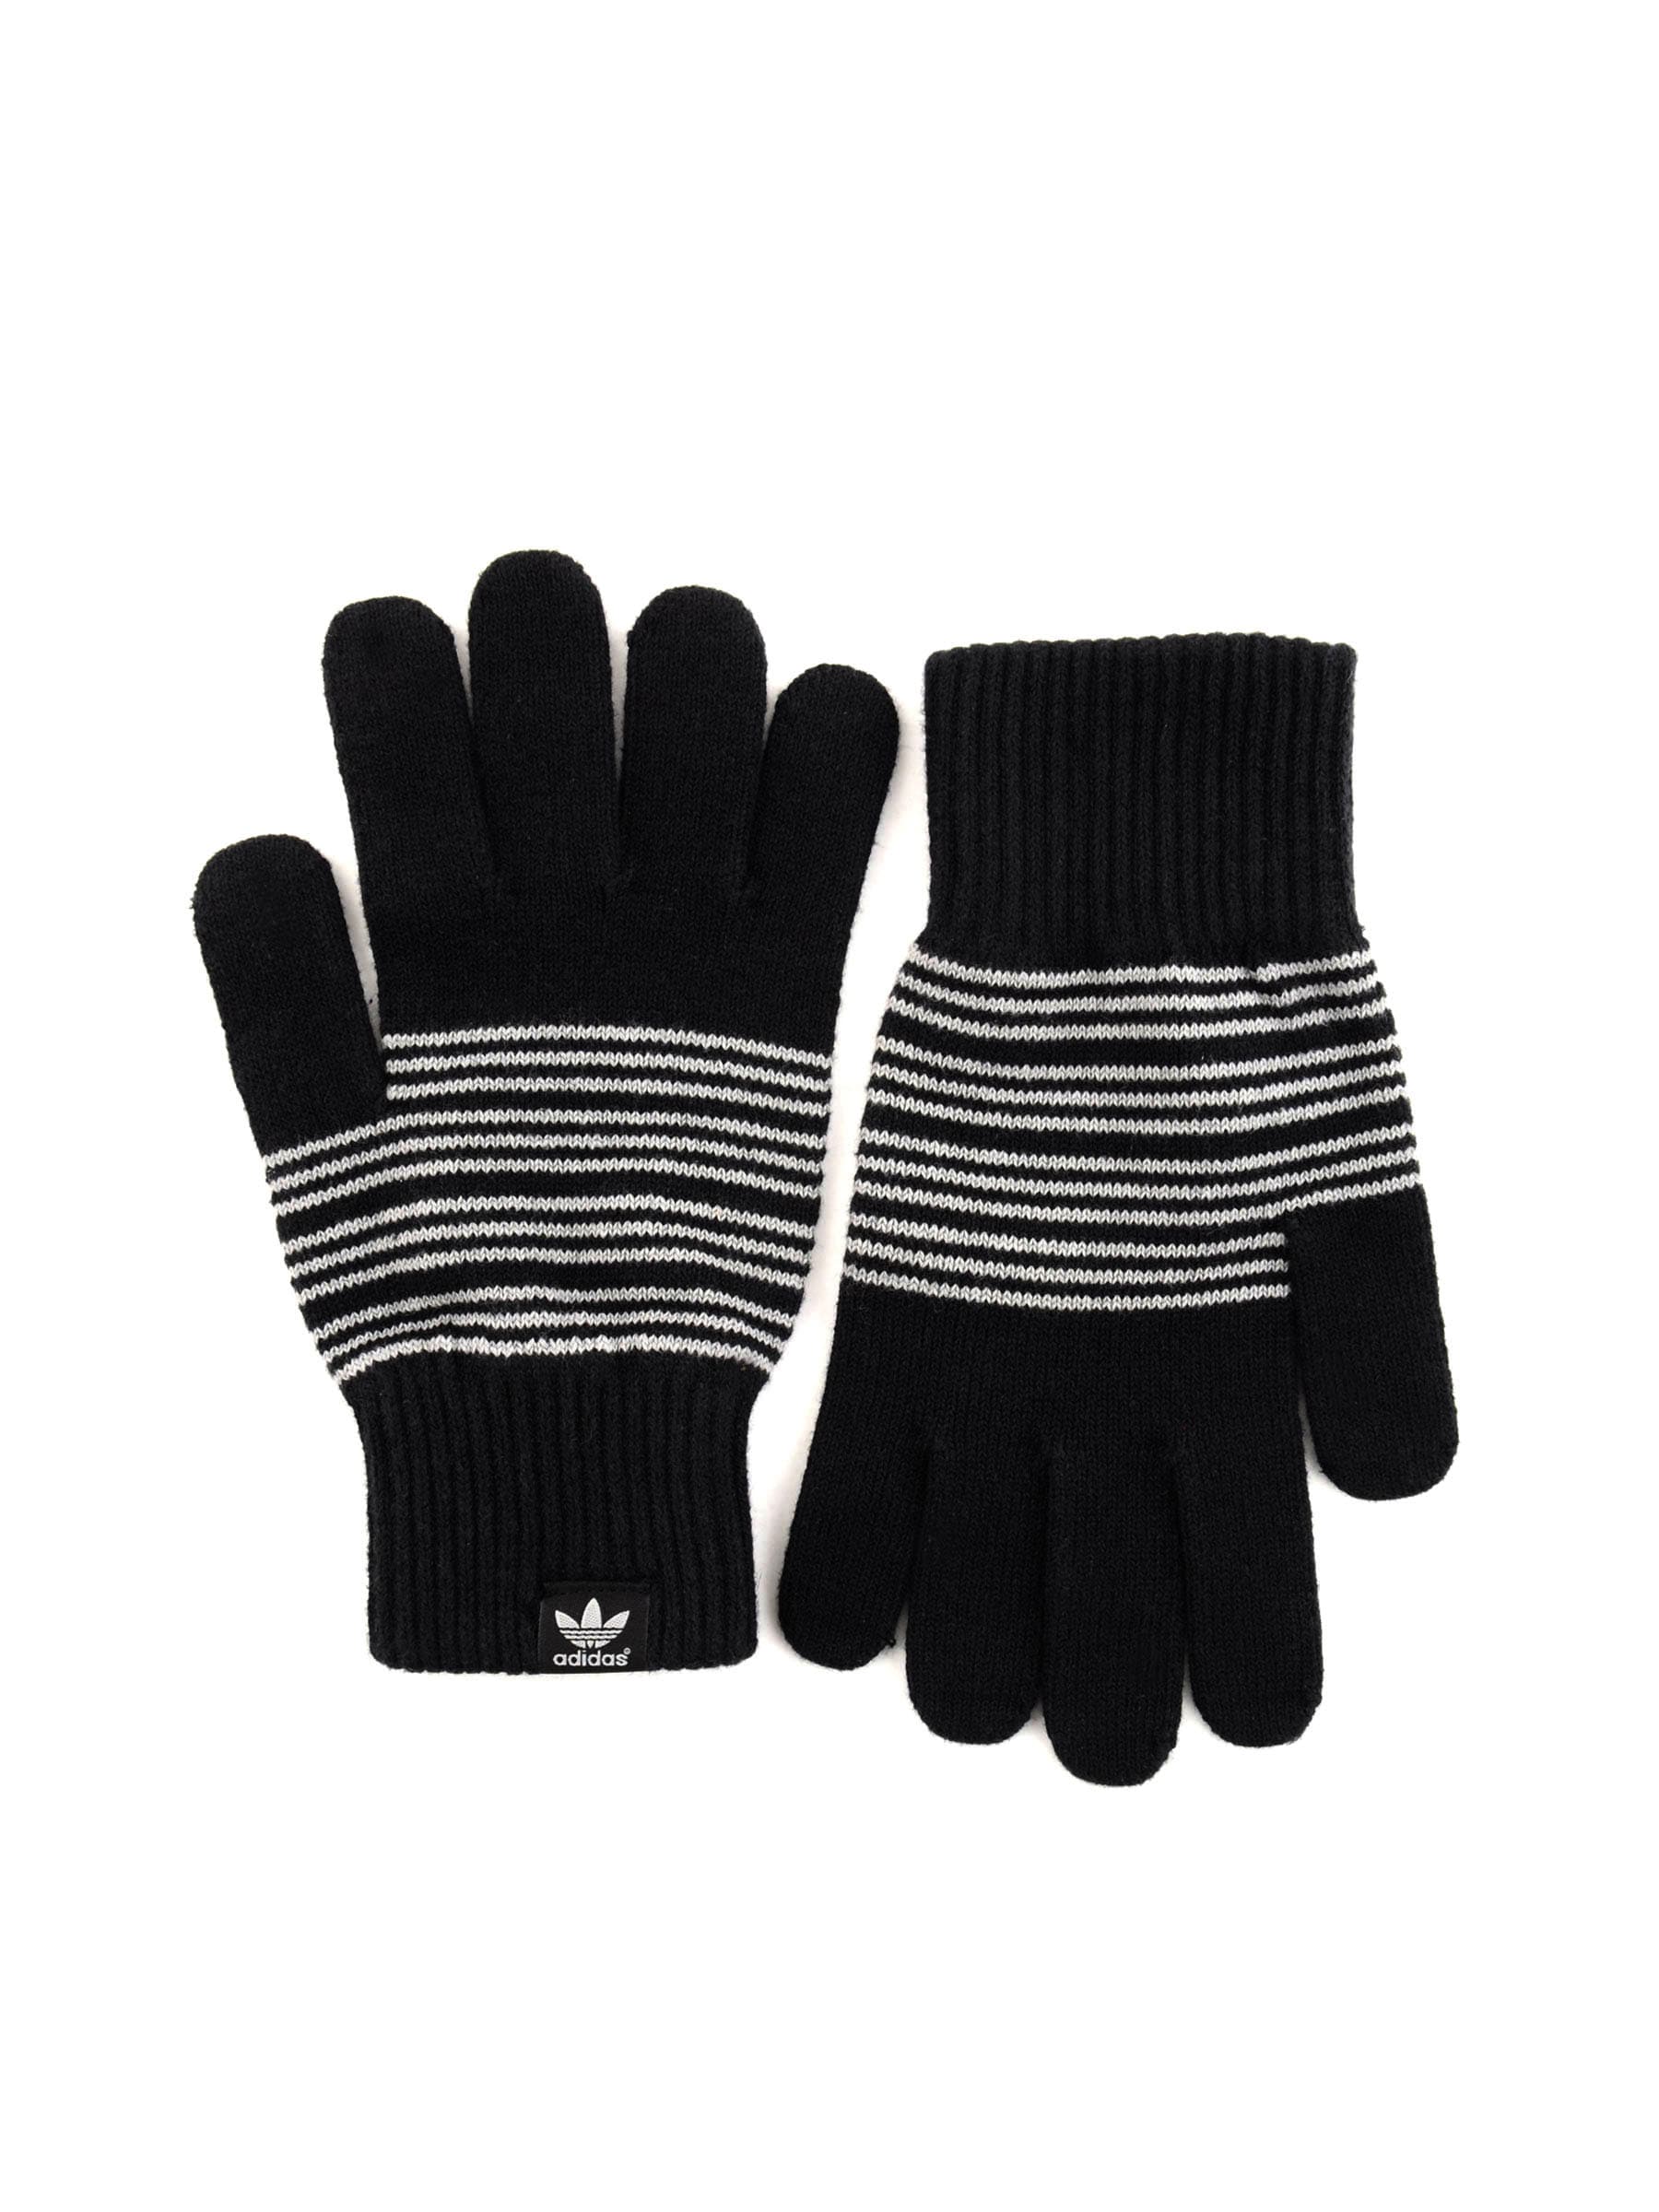 ADIDAS Originals Unisex AC Striped Black Gloves